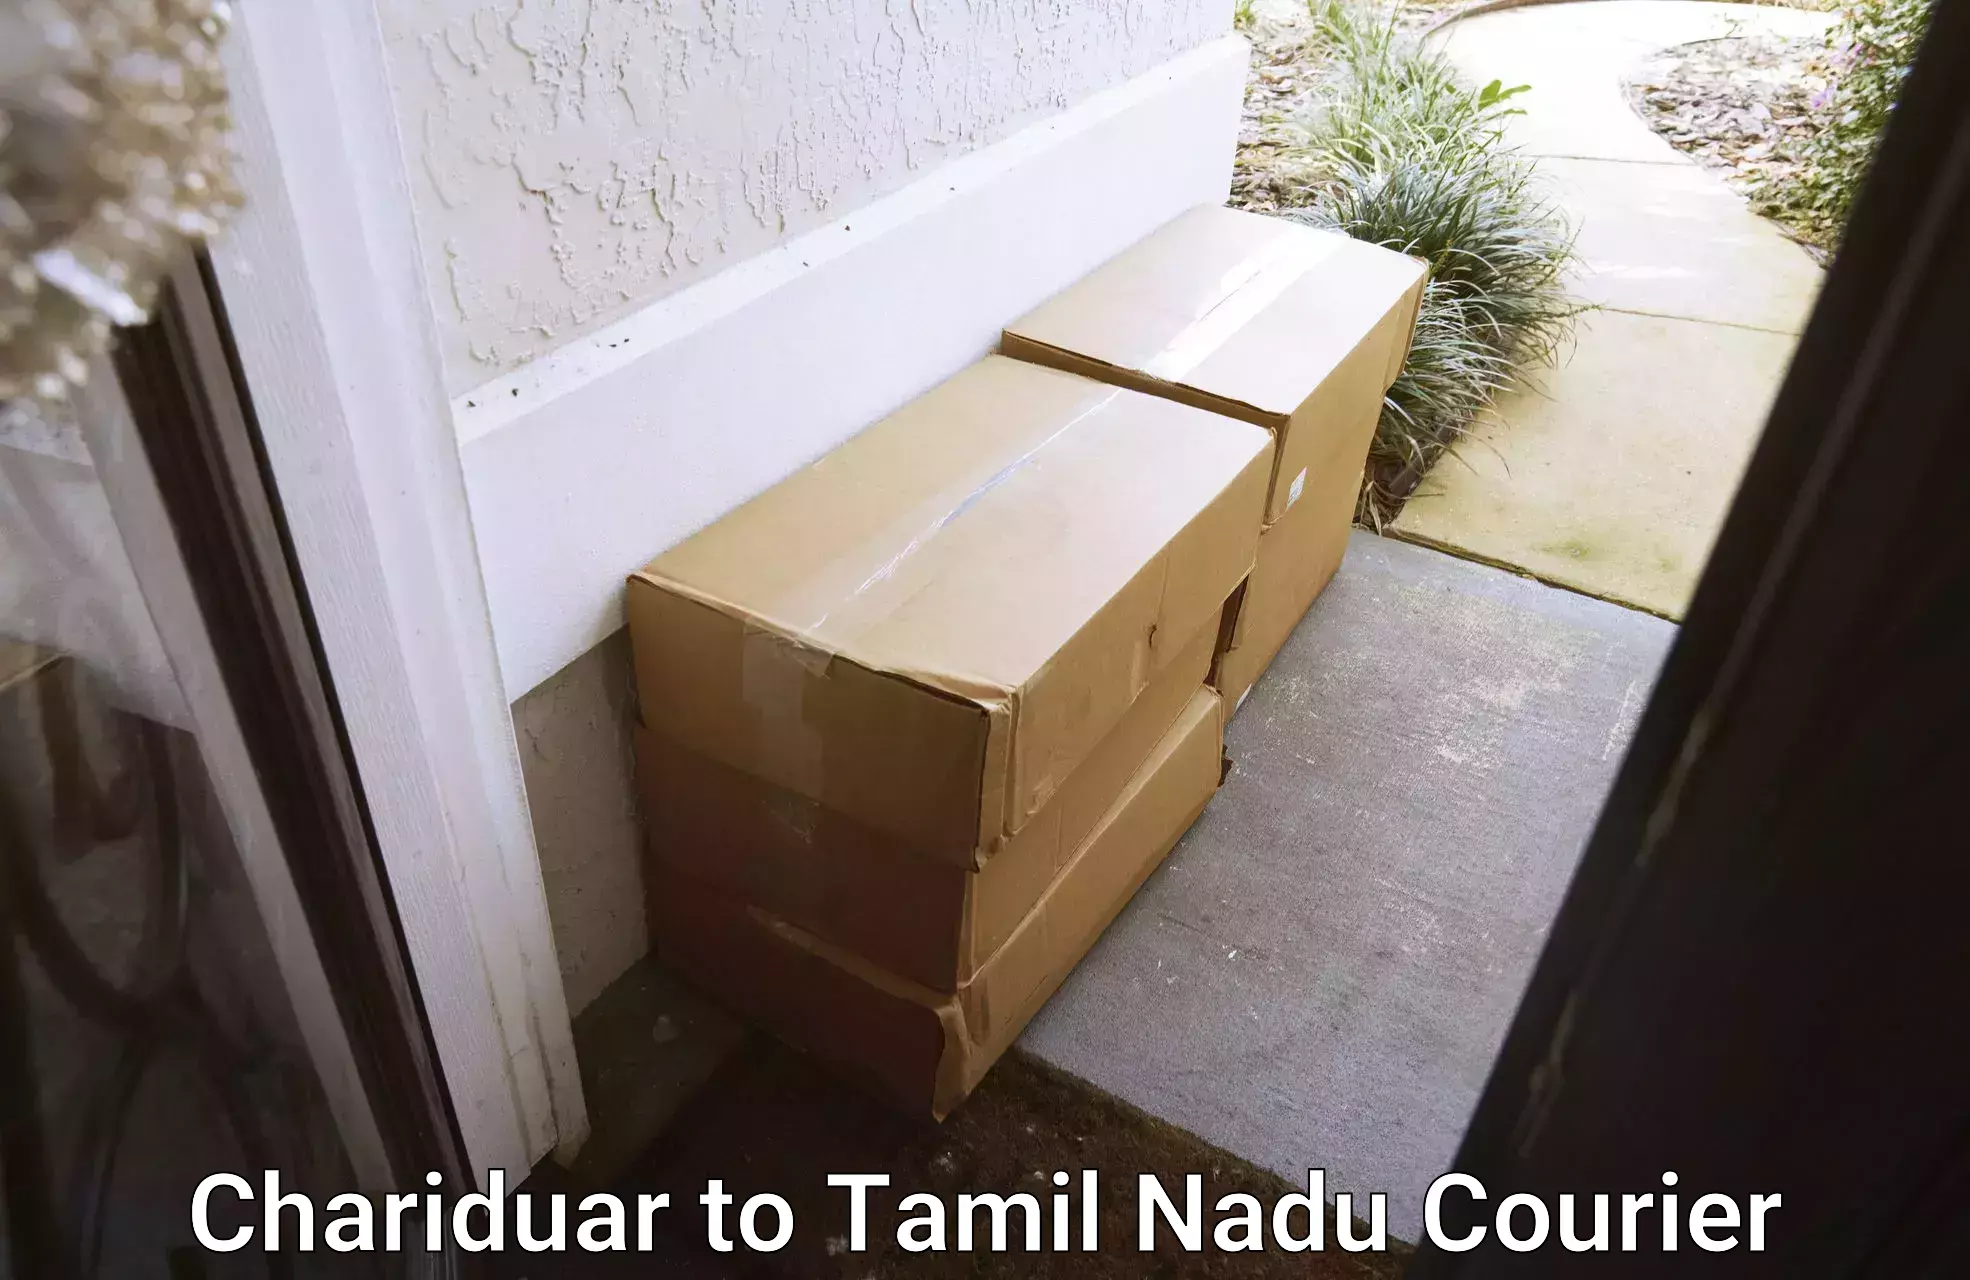 Full-service courier options Chariduar to Perunali